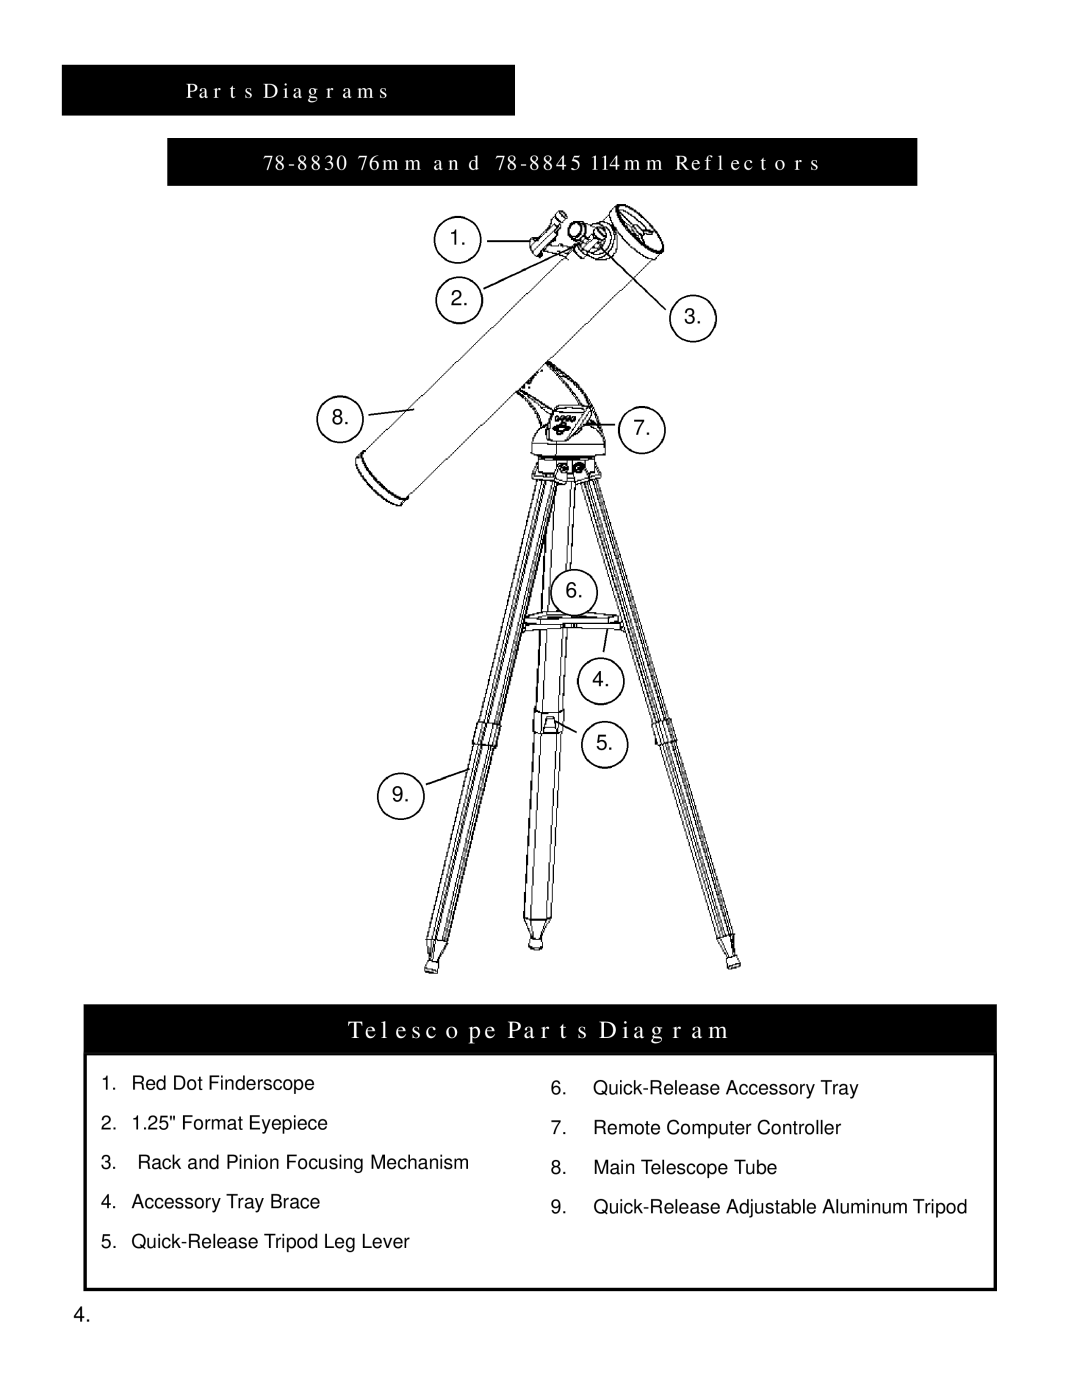 Bushnell instruction manual Parts Diagrams, 78-883076mm and 78-8845114mm Reflectors, Telescope Parts Diagram 